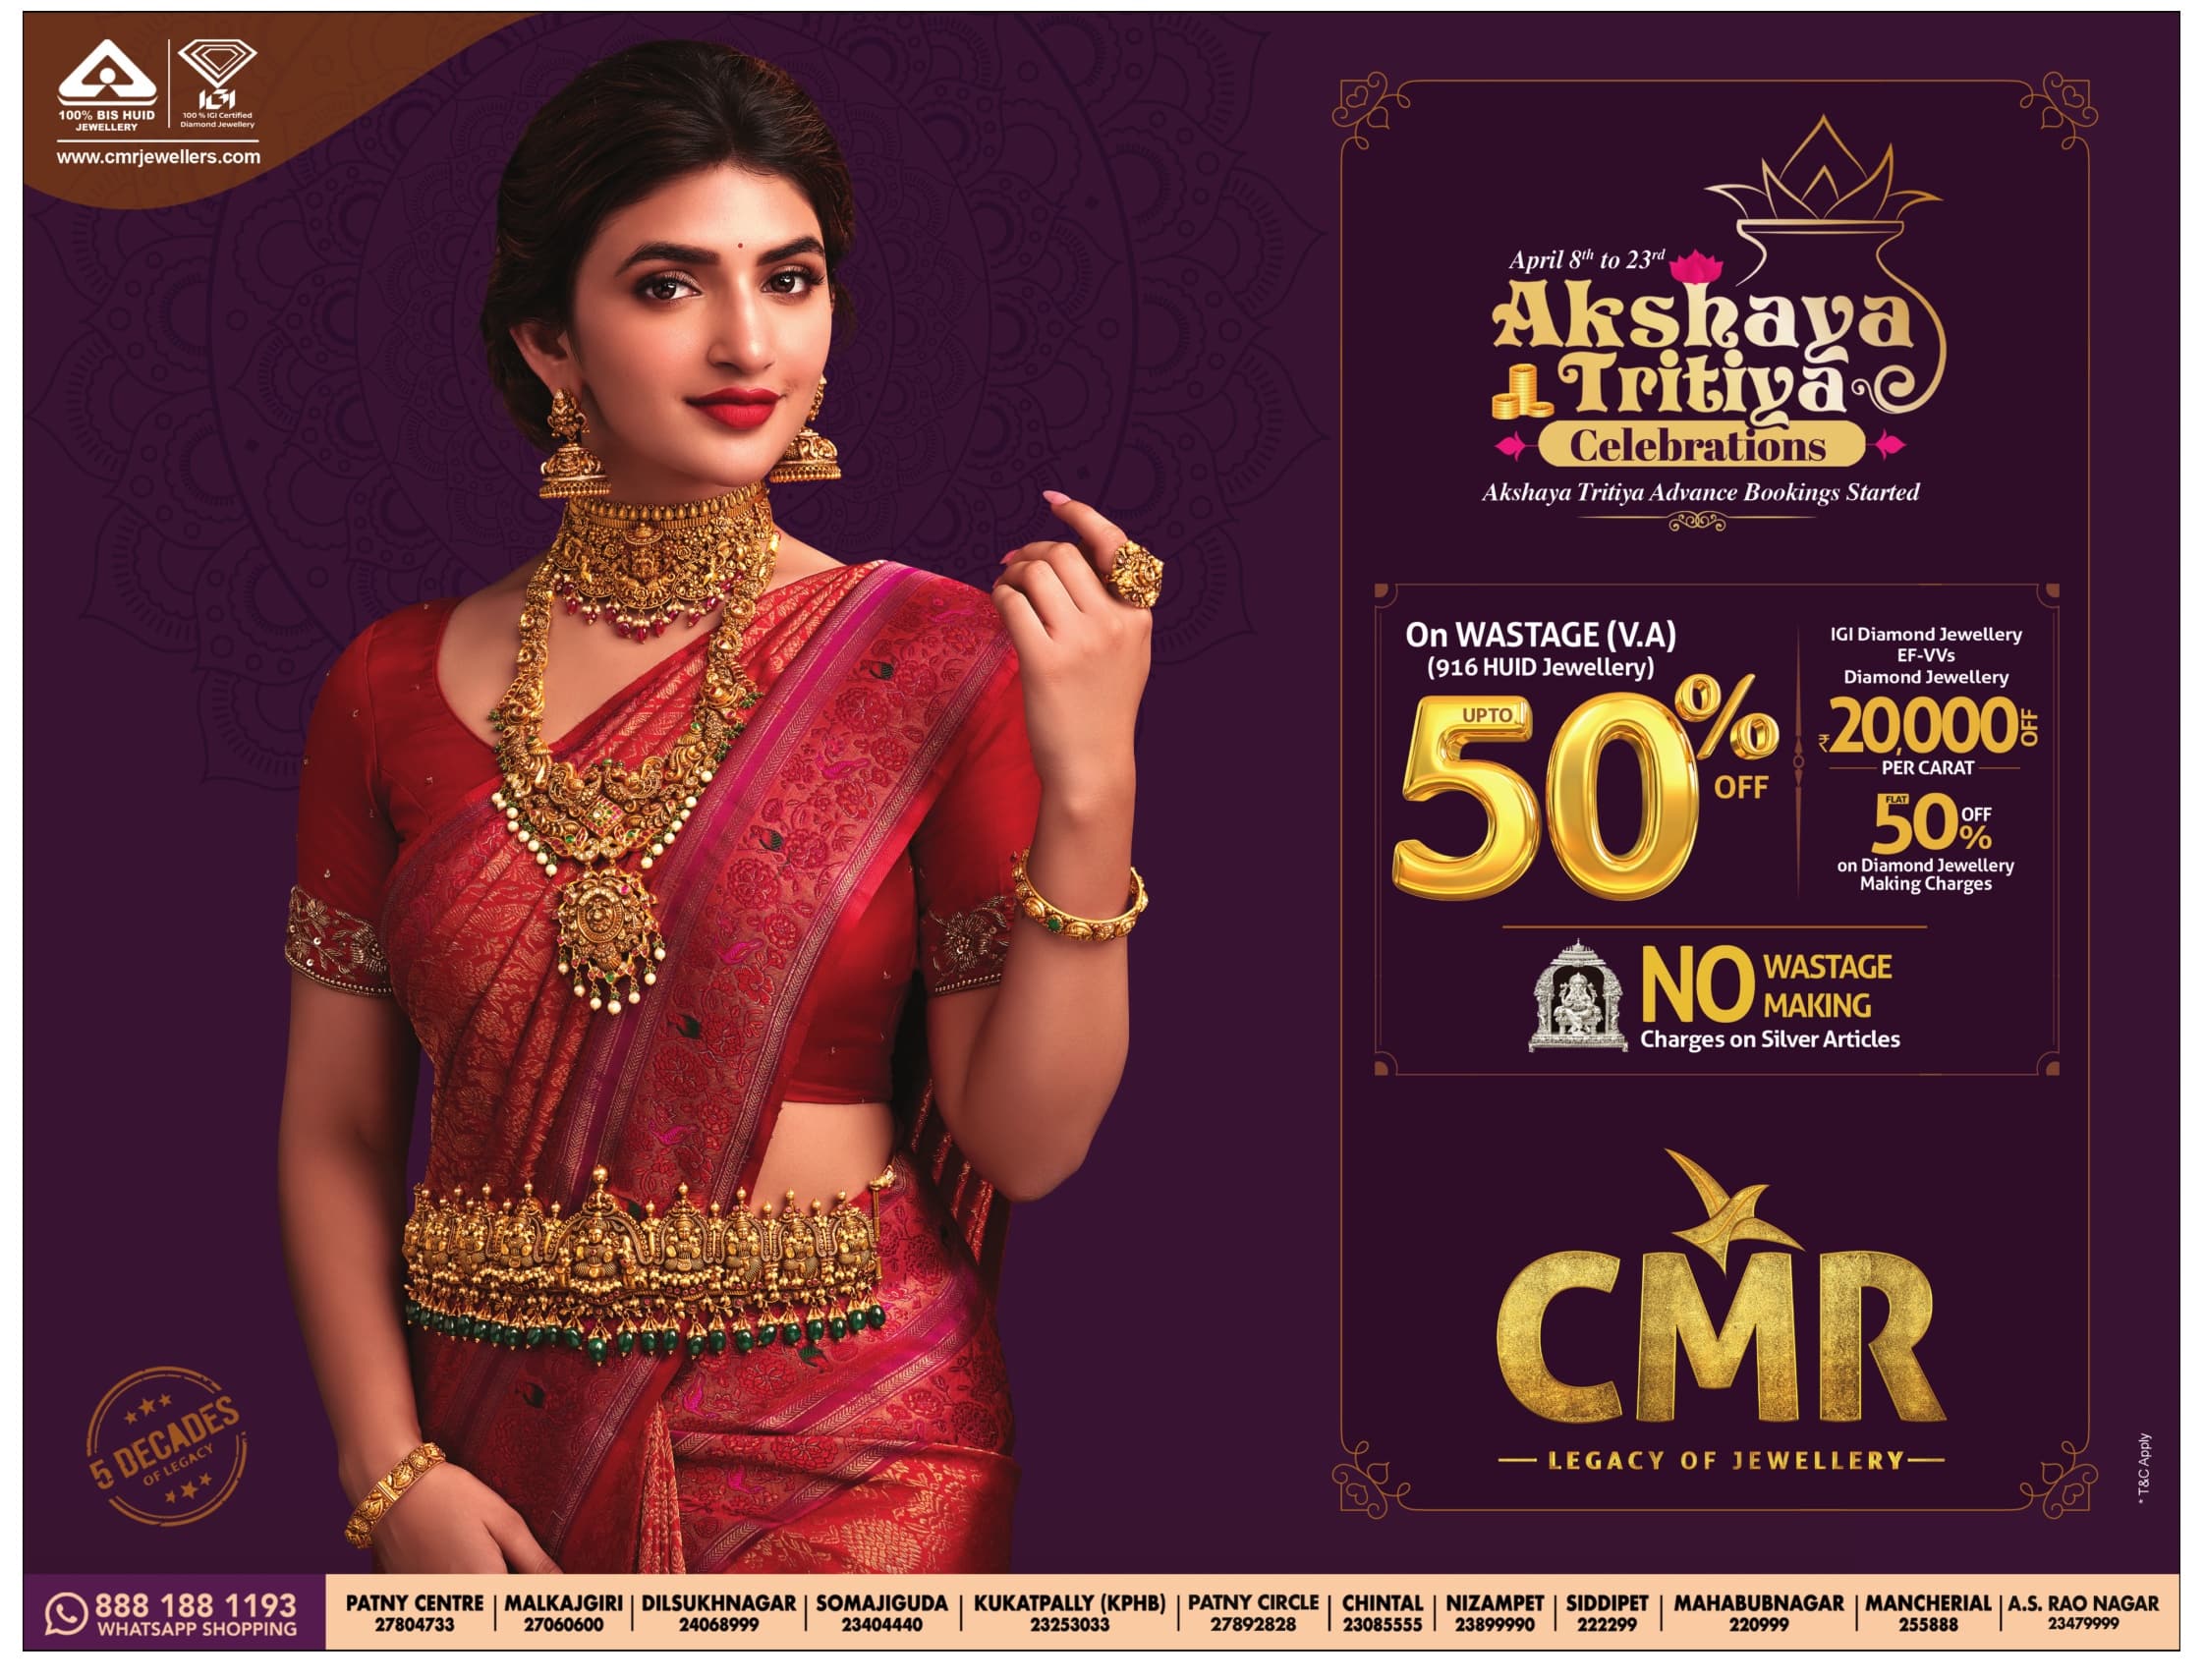 CMR Jewellery Akshaya Tritiya offers